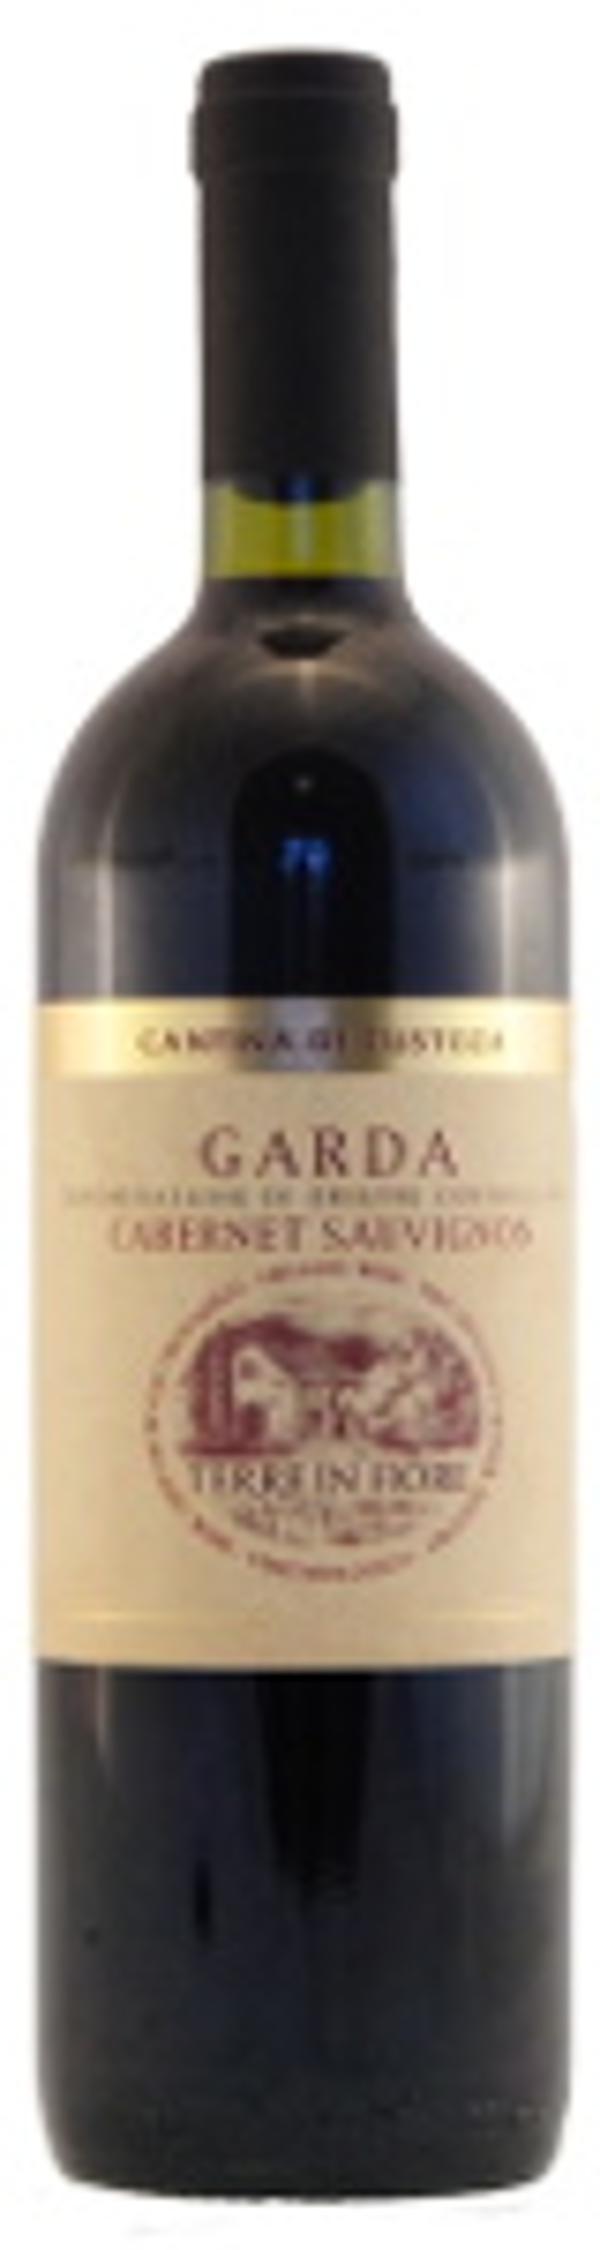 Produktfoto zu VPE Cabernet Sauvignon Garda 6x0,75 l